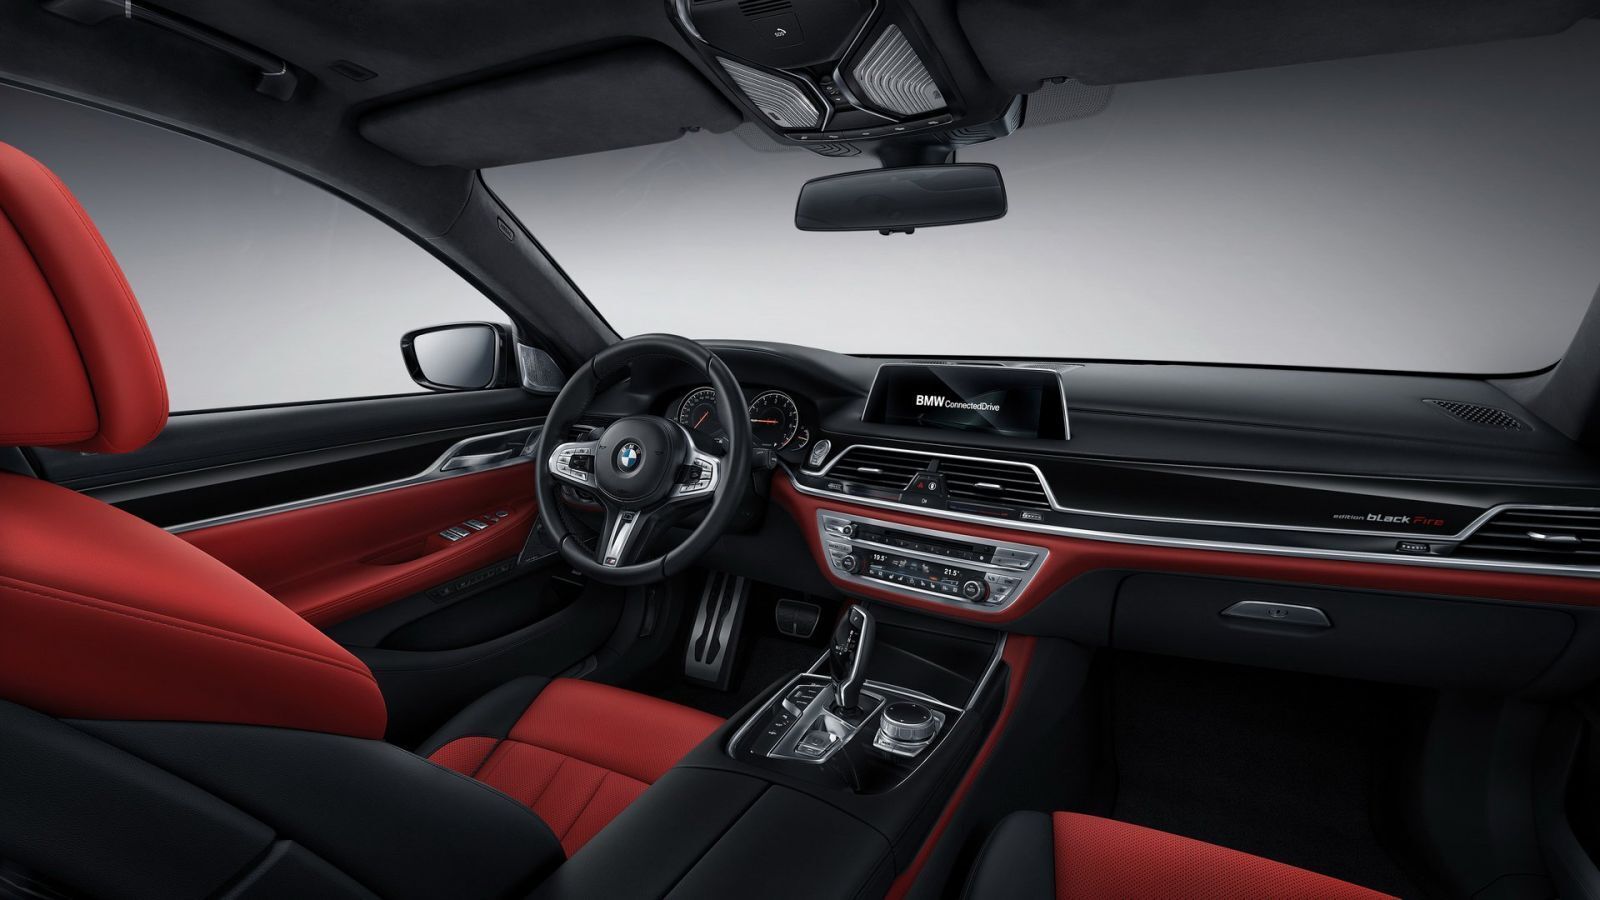 BMW 7-Series Black Fire Edition